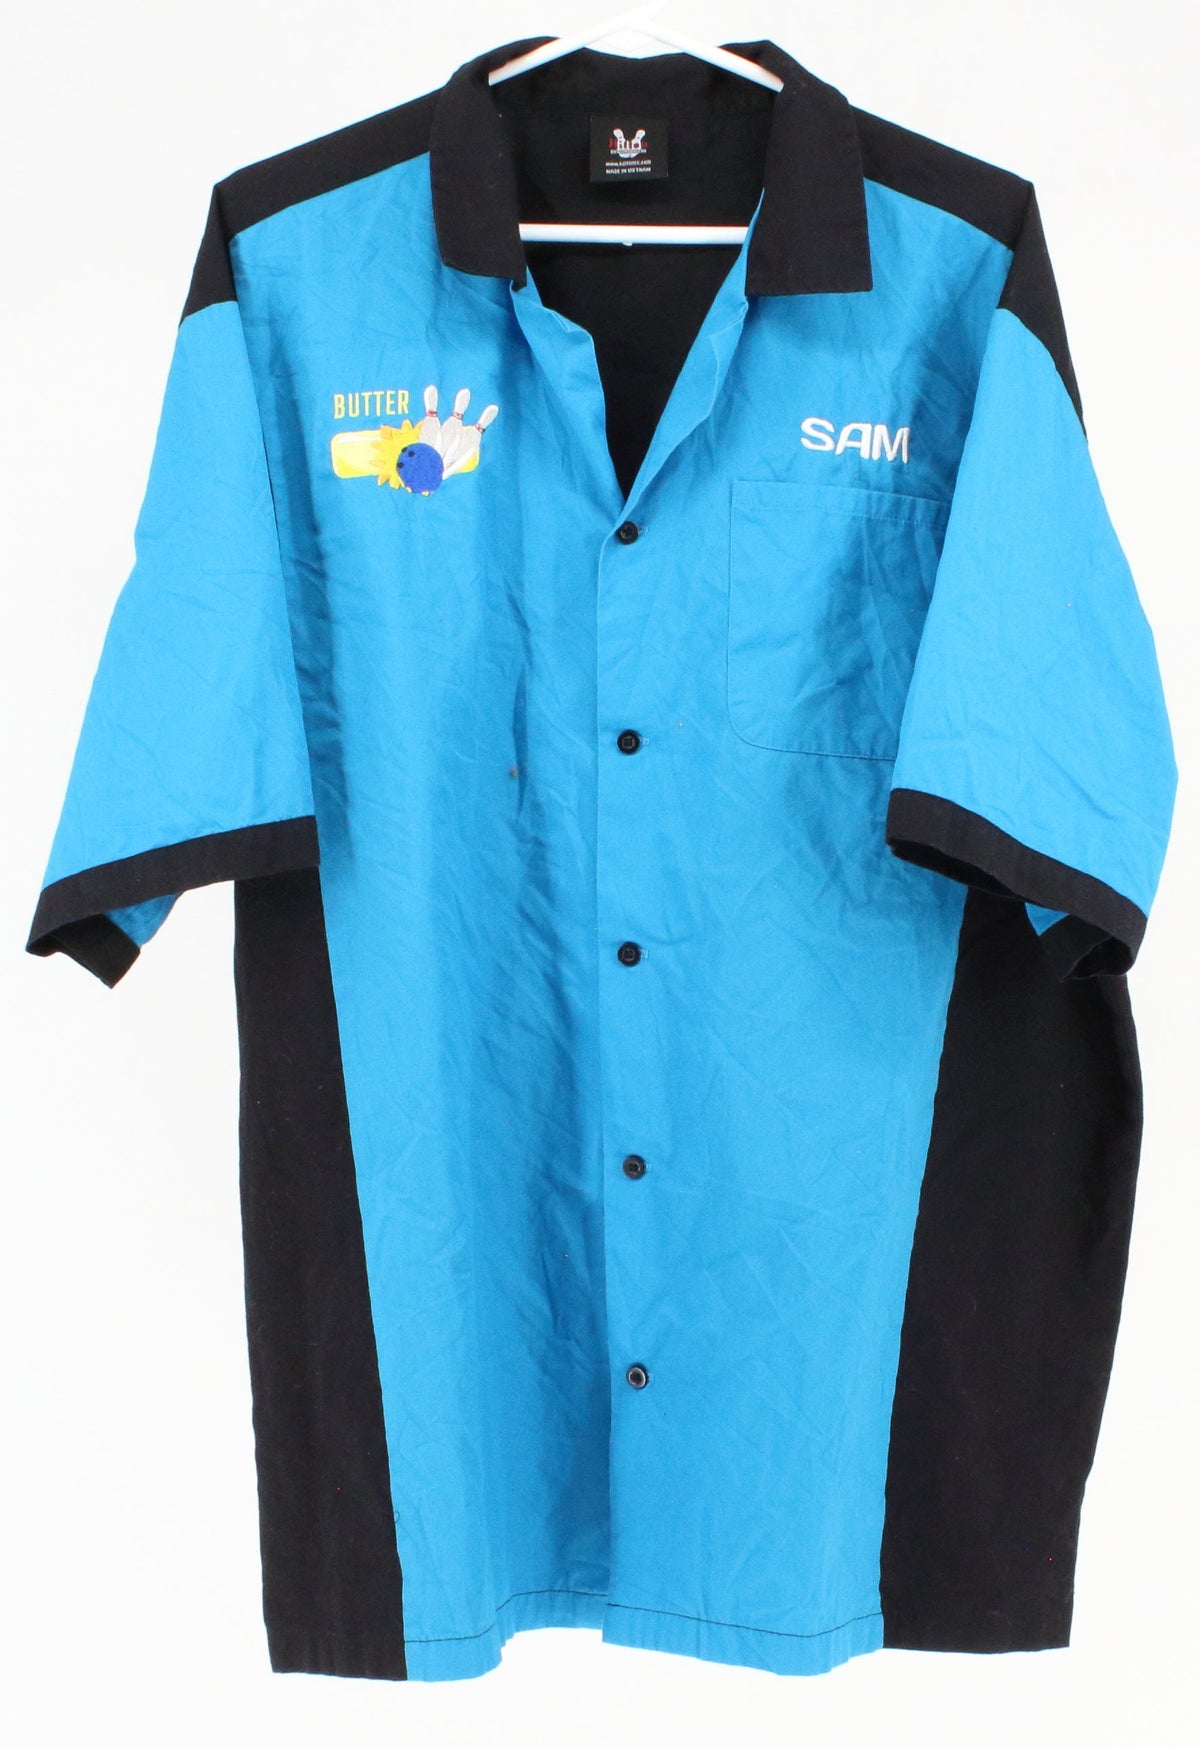 Hilton Bowling Retro Team Butter Blue & Black Short Sleeve Bowling Shirt